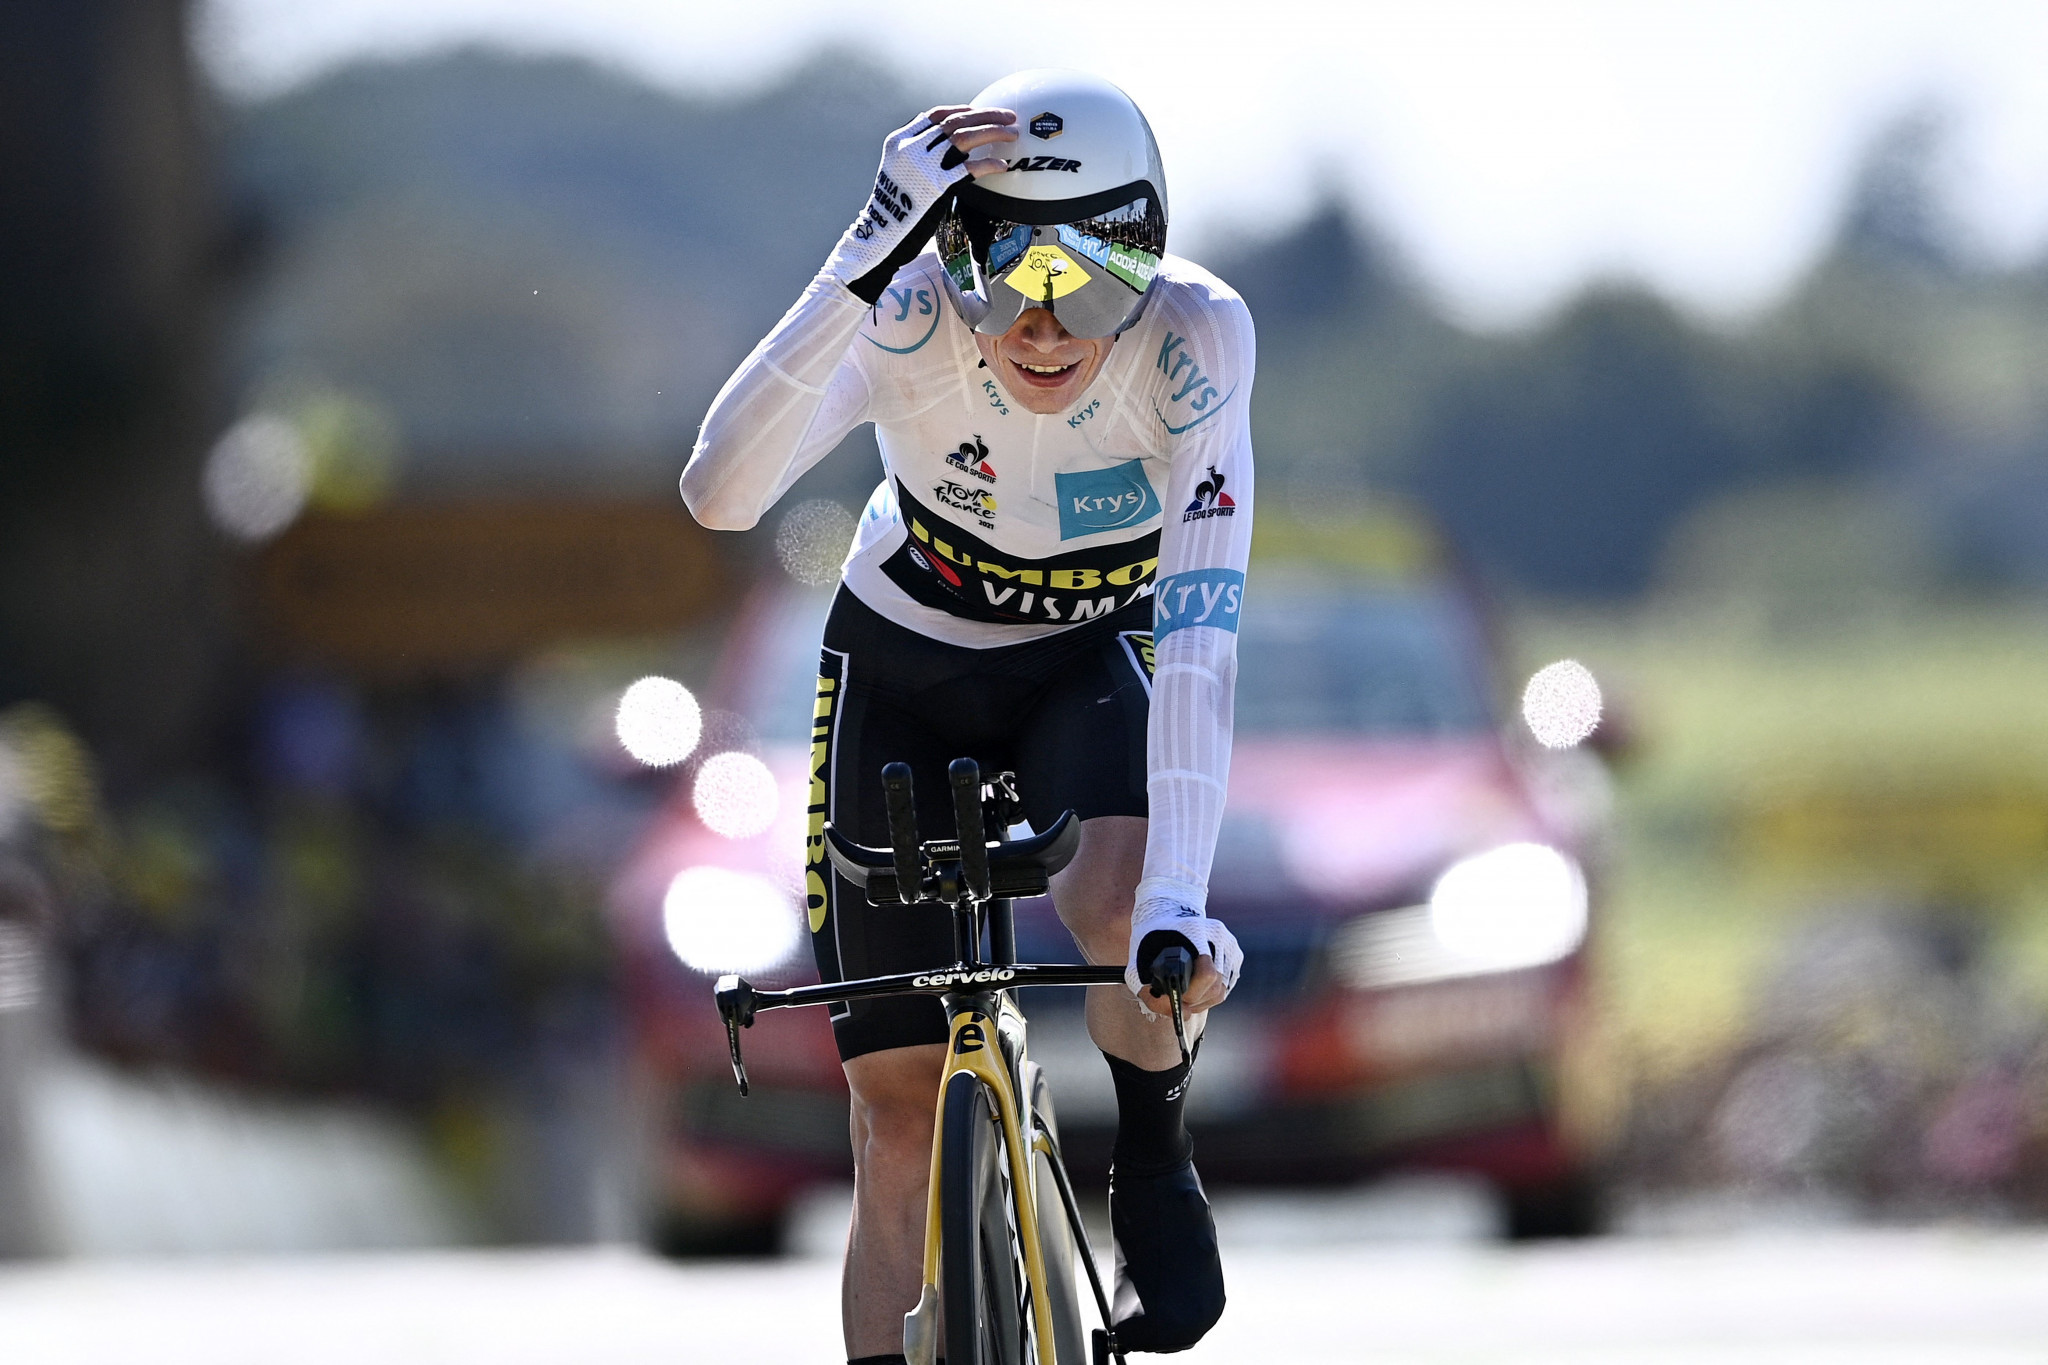 Exclusive: Sørensen has high hopes for "complete rider" Vingegaard in race for Tour de France title